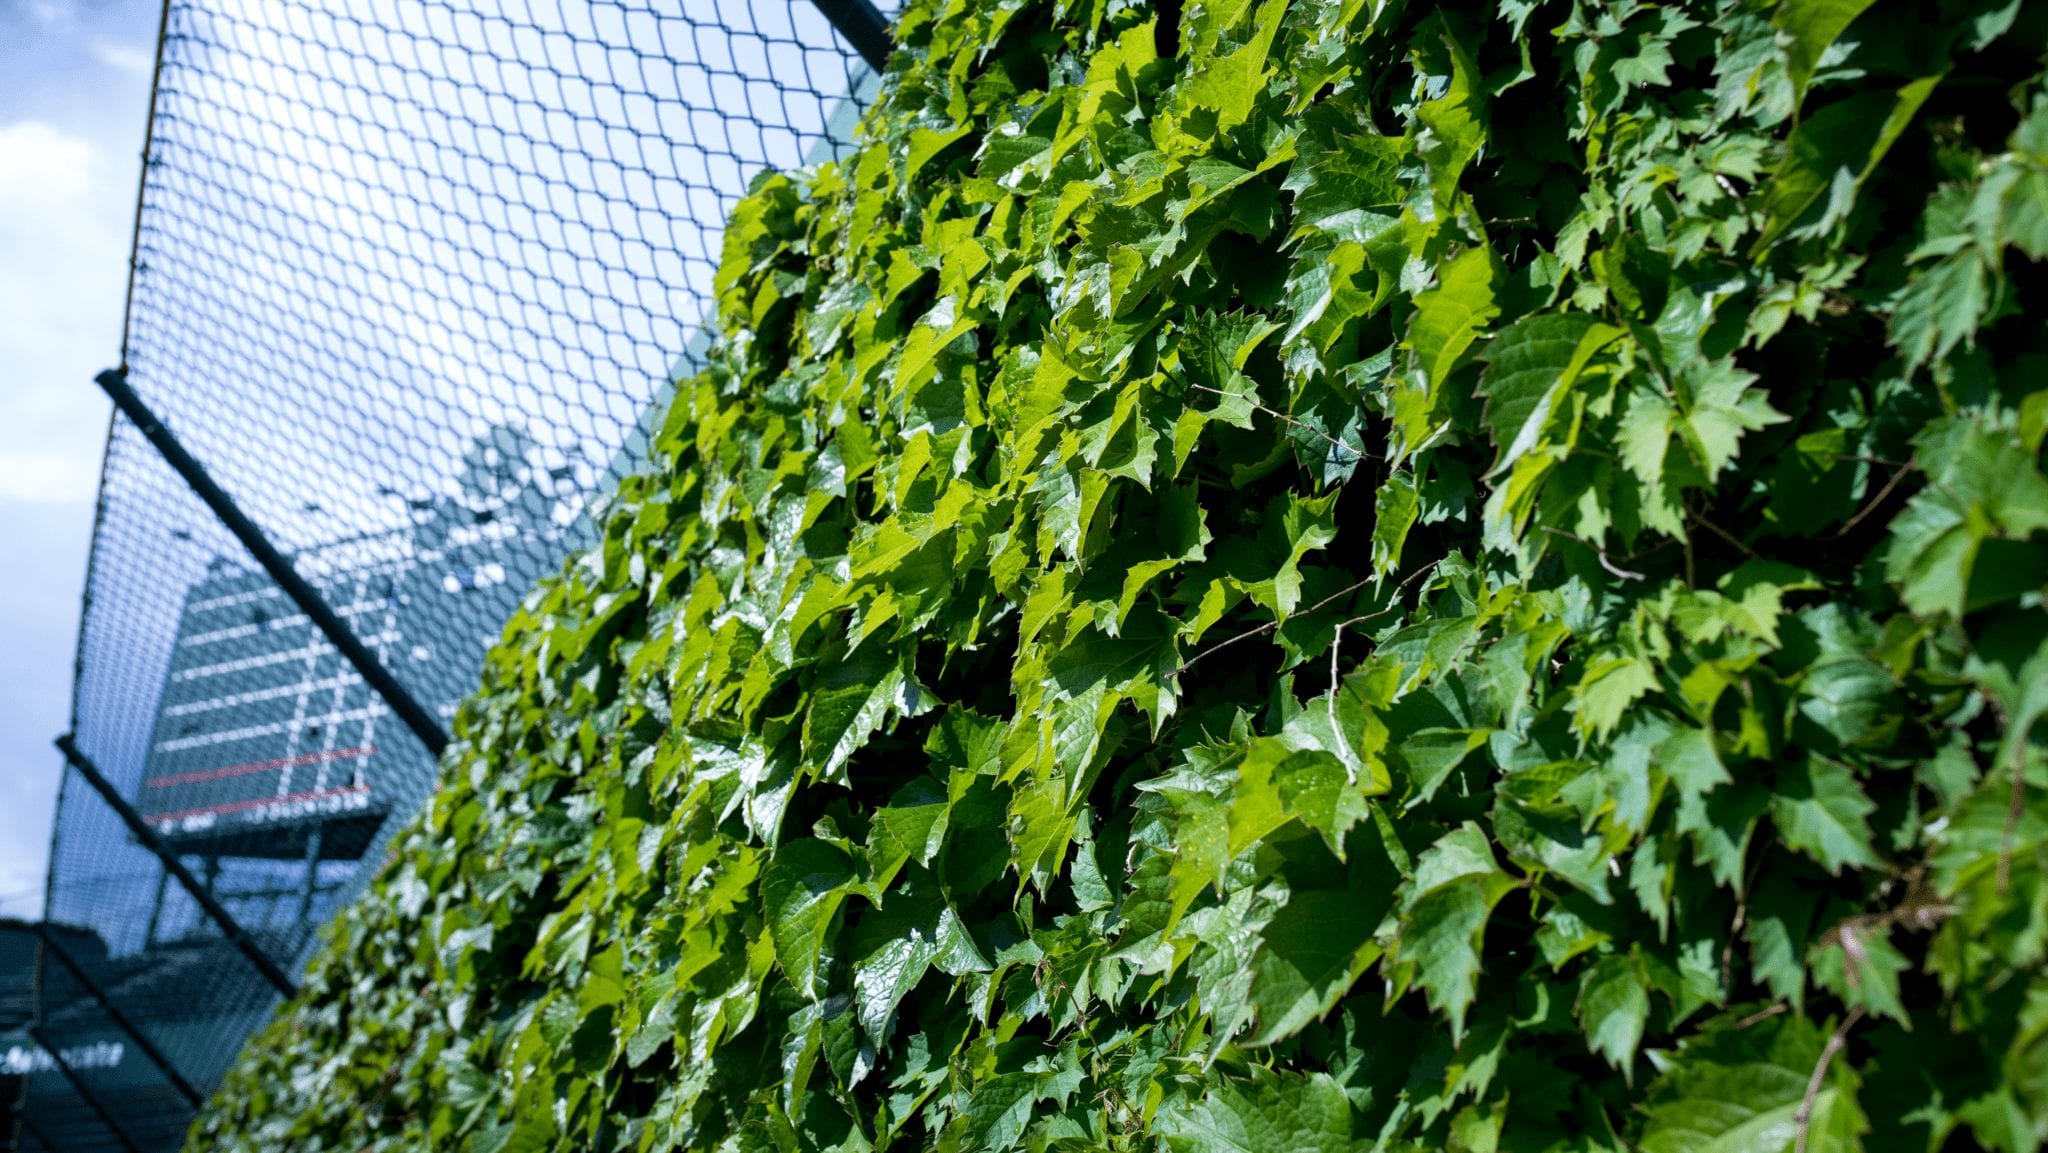 Wrigley field ivy with scoreboard background